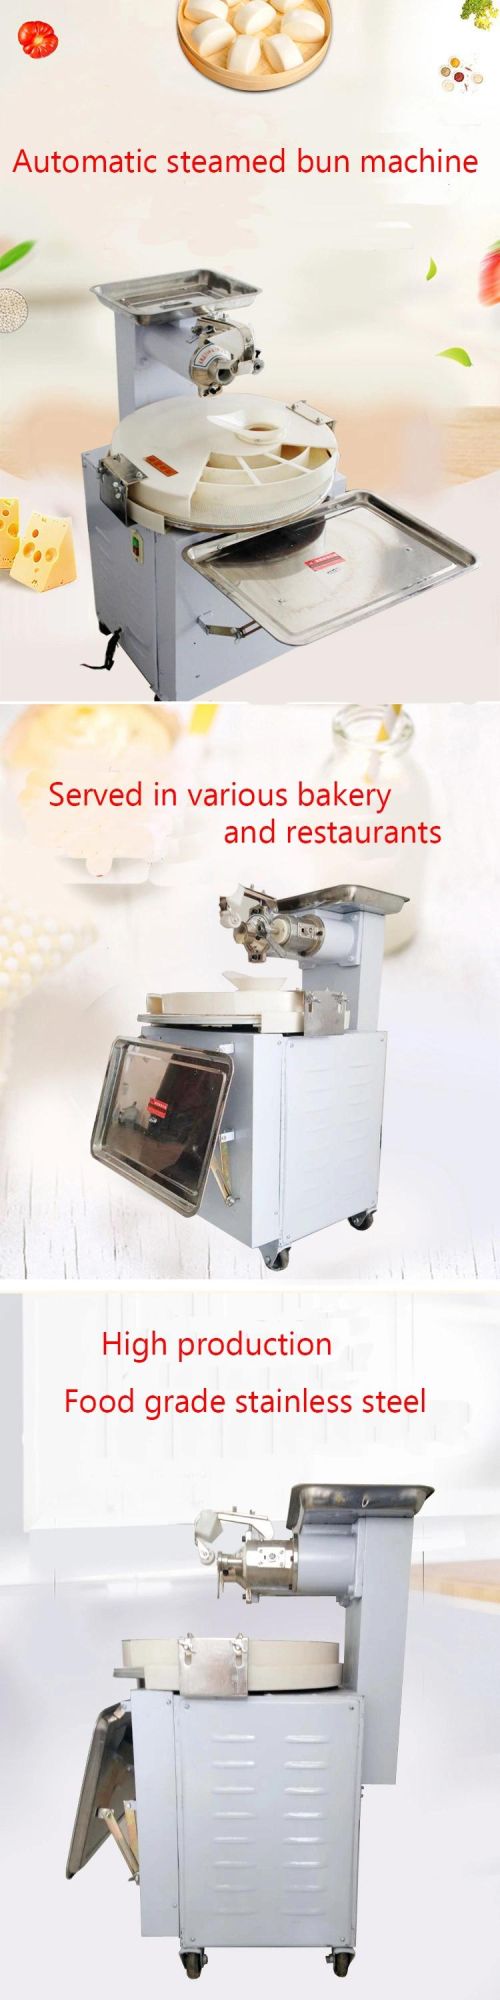 Commercial Dough Divider Machine/100g Dough Divider /Dough Divider Rounder for Hamburger Buns